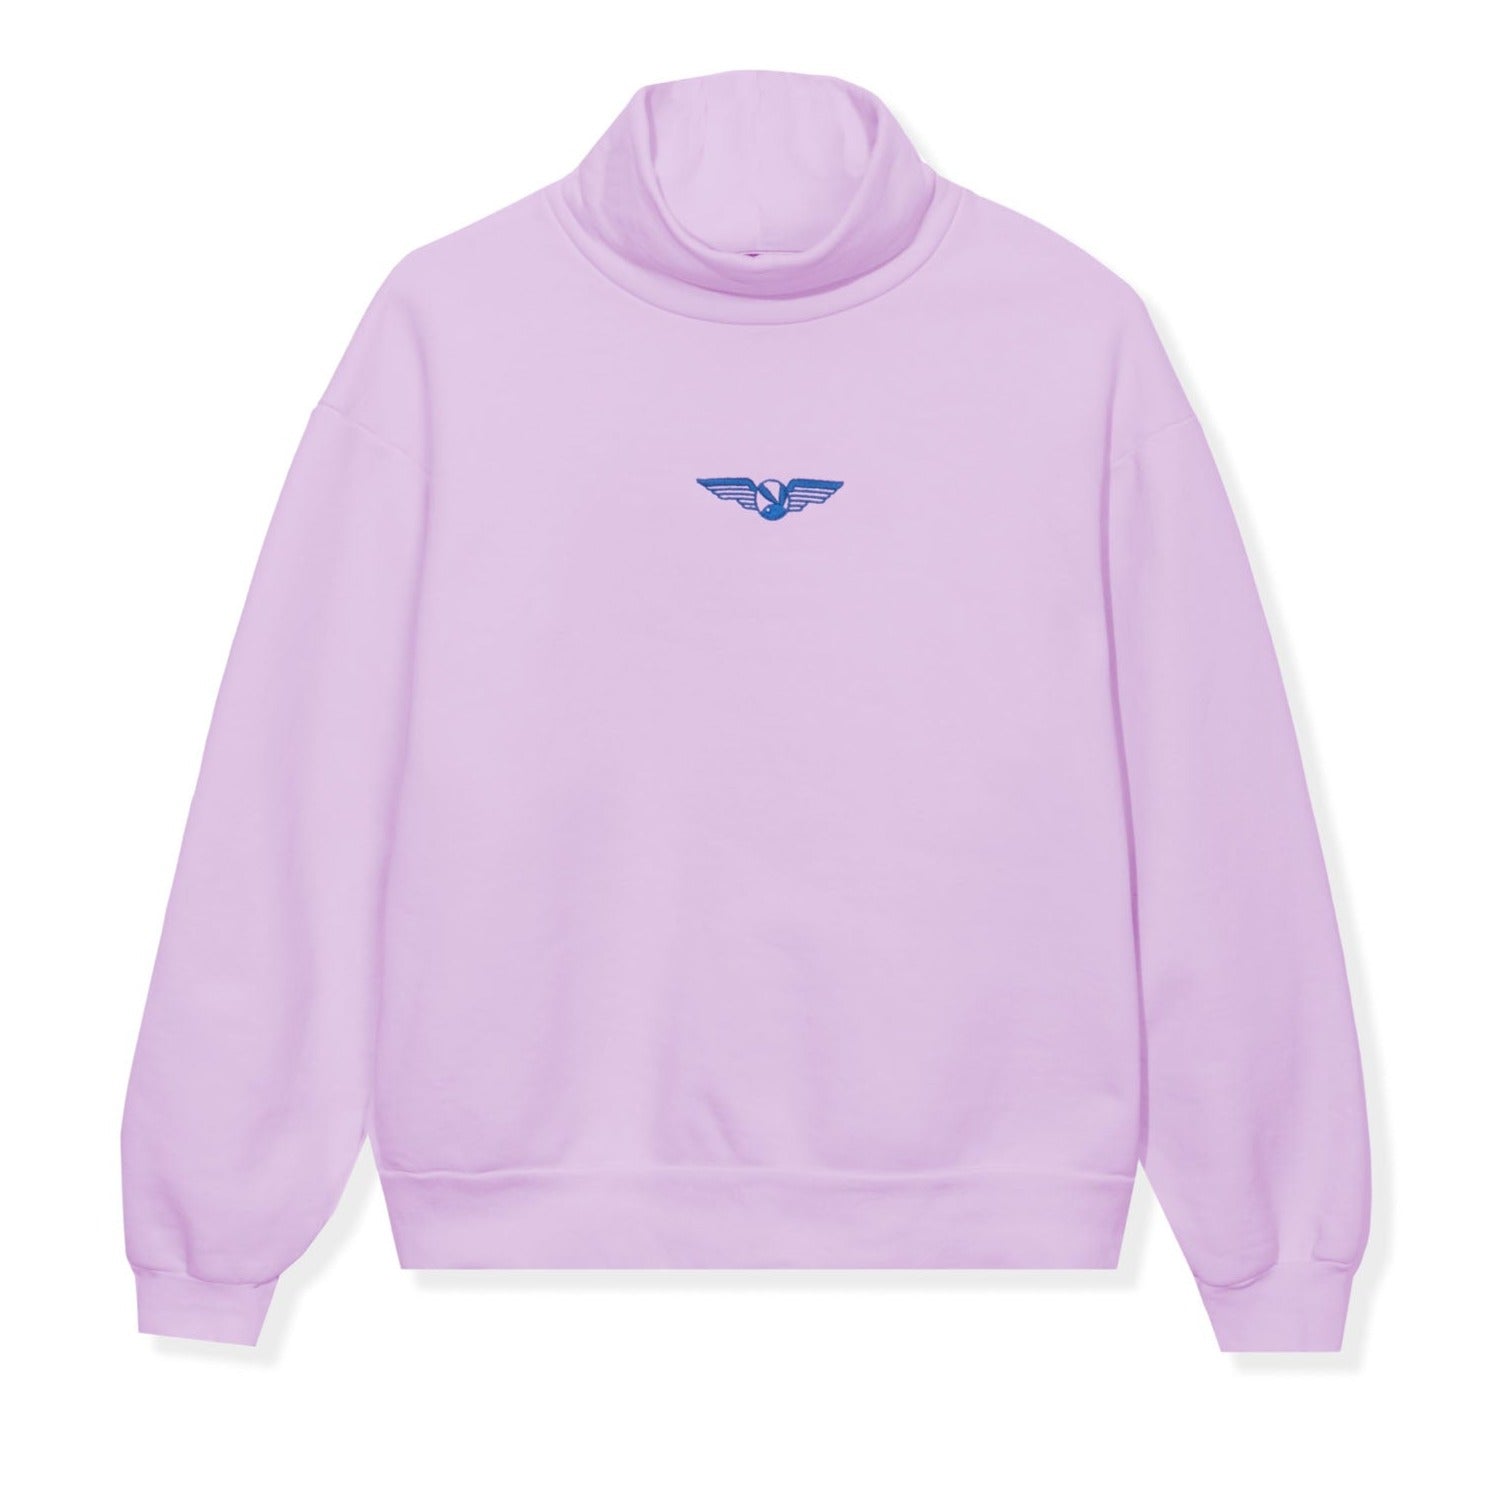 Aviation Wings High Neck Sweatshirt